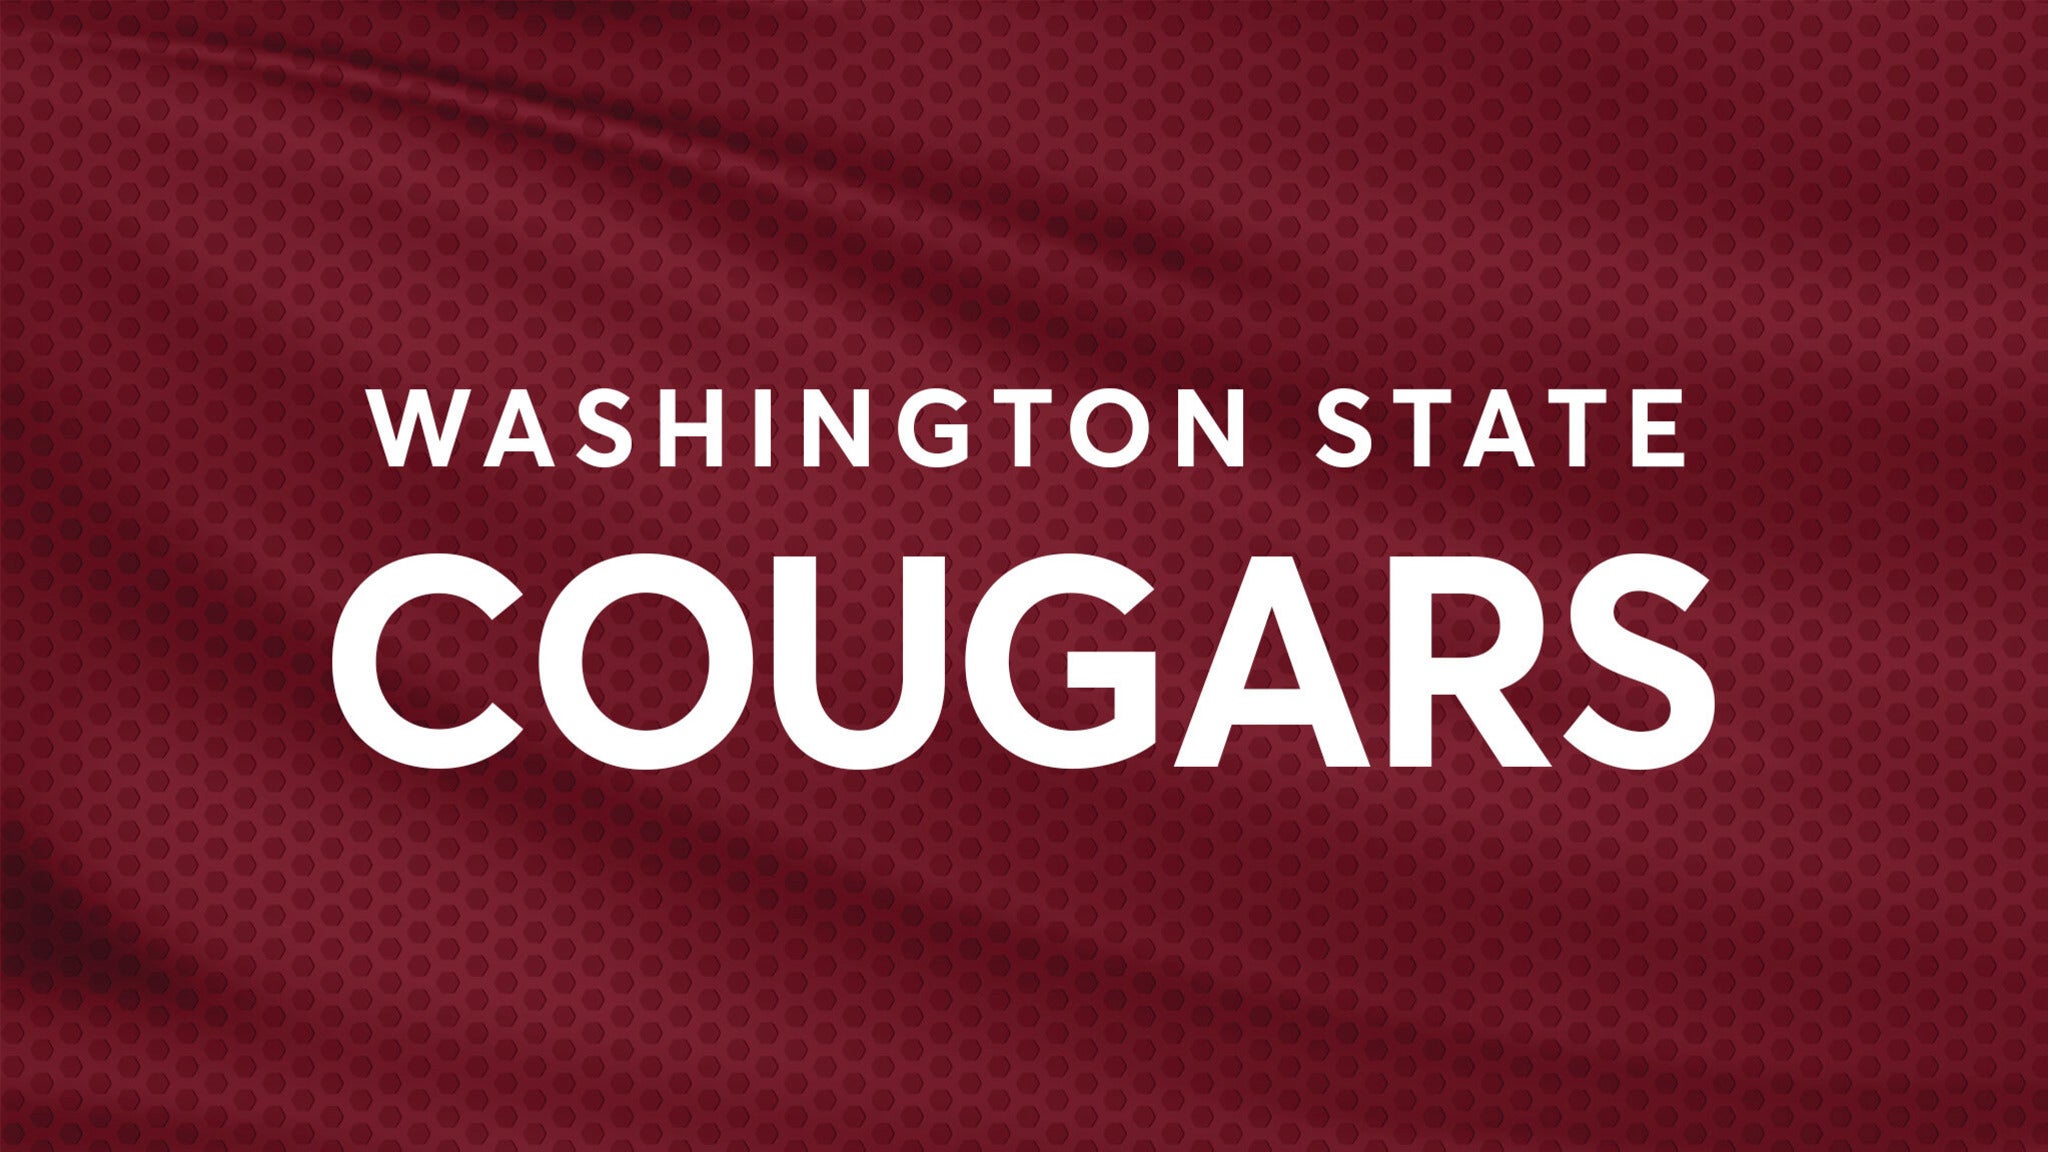 Washington State Cougars Volleyball presale information on freepresalepasswords.com